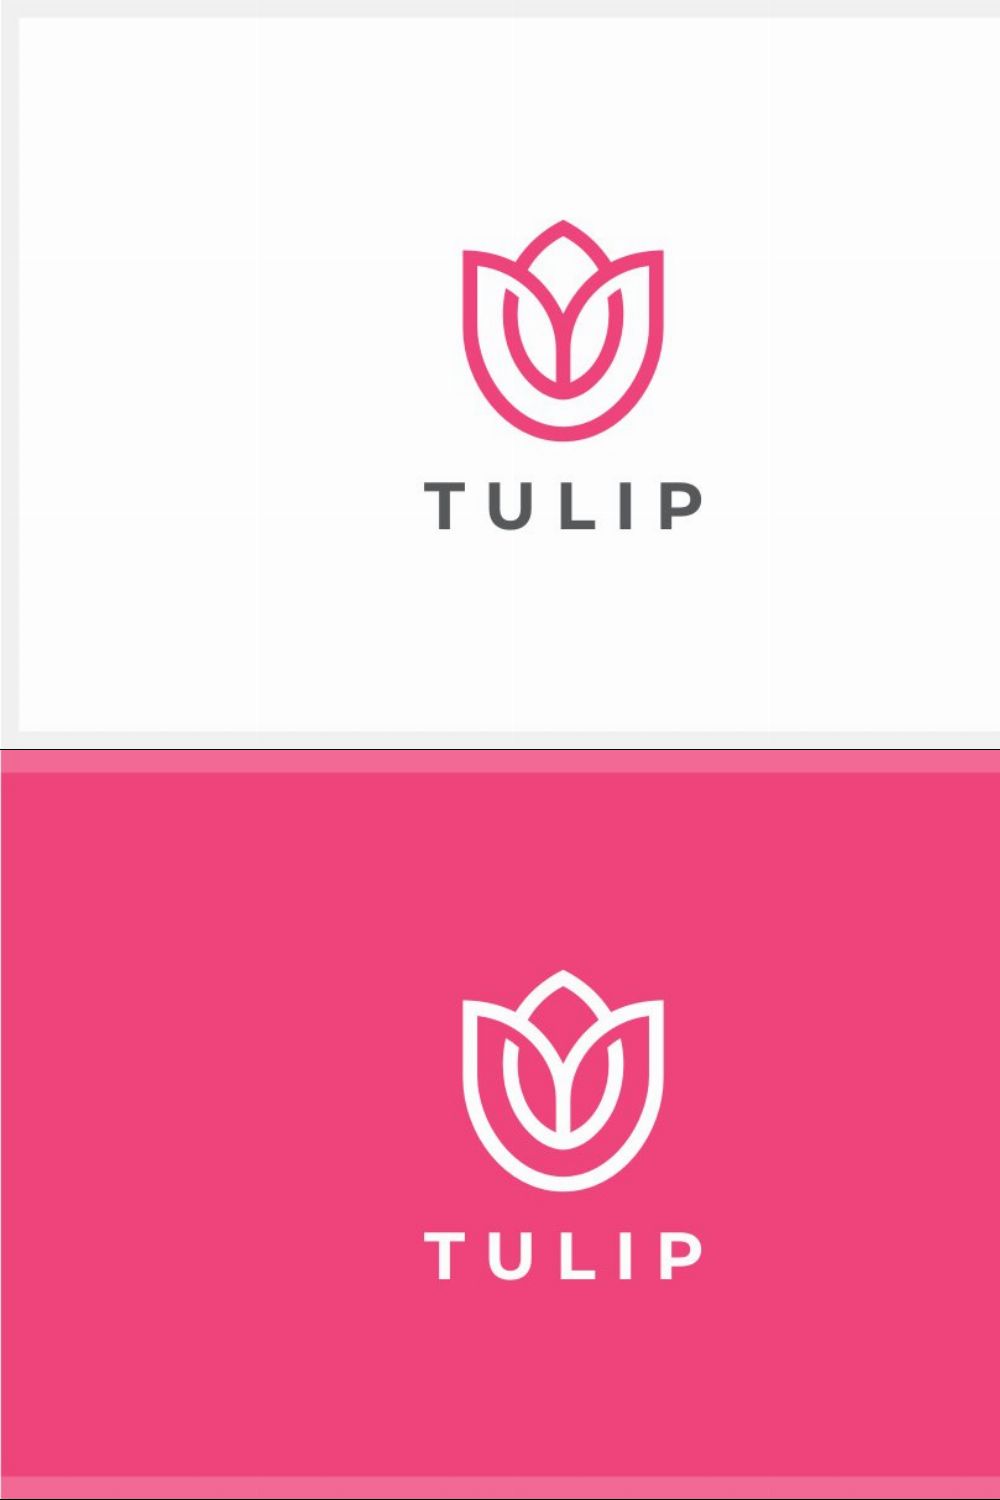 Tulip flower logo template pinterest preview image.